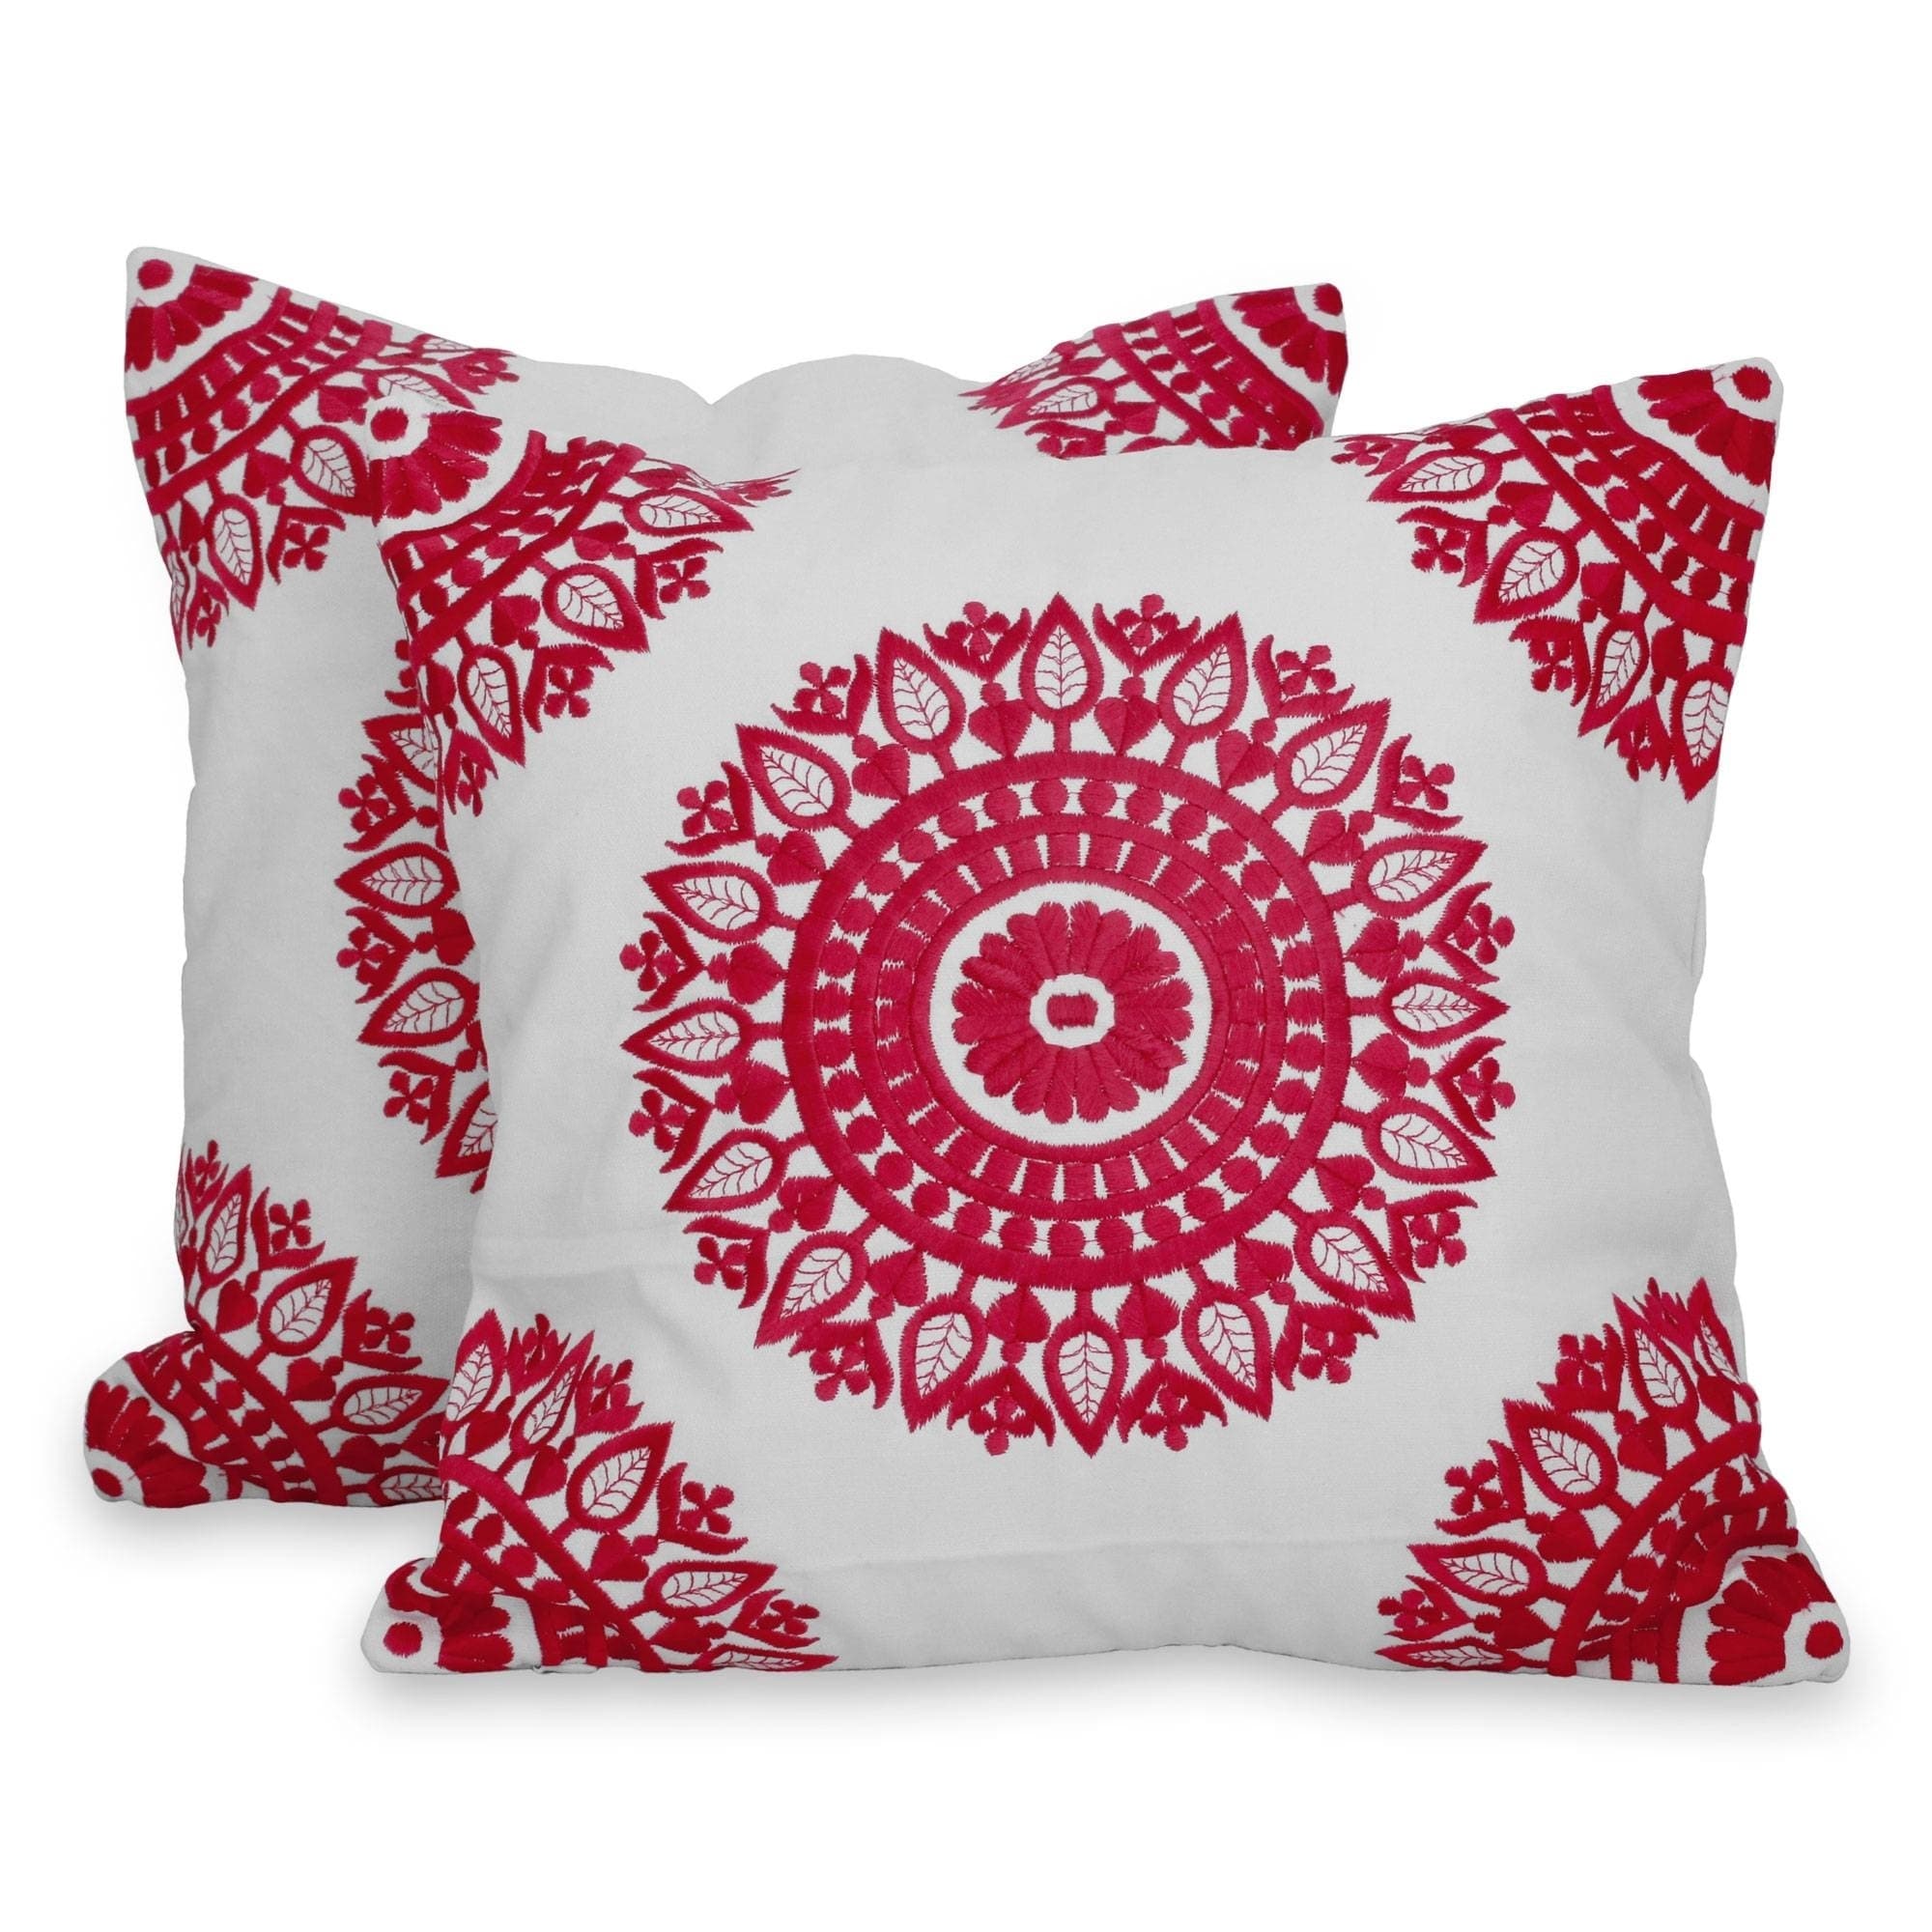 Handmade Hot Pink Mandalas Cotton cushion covers (pair) (India)